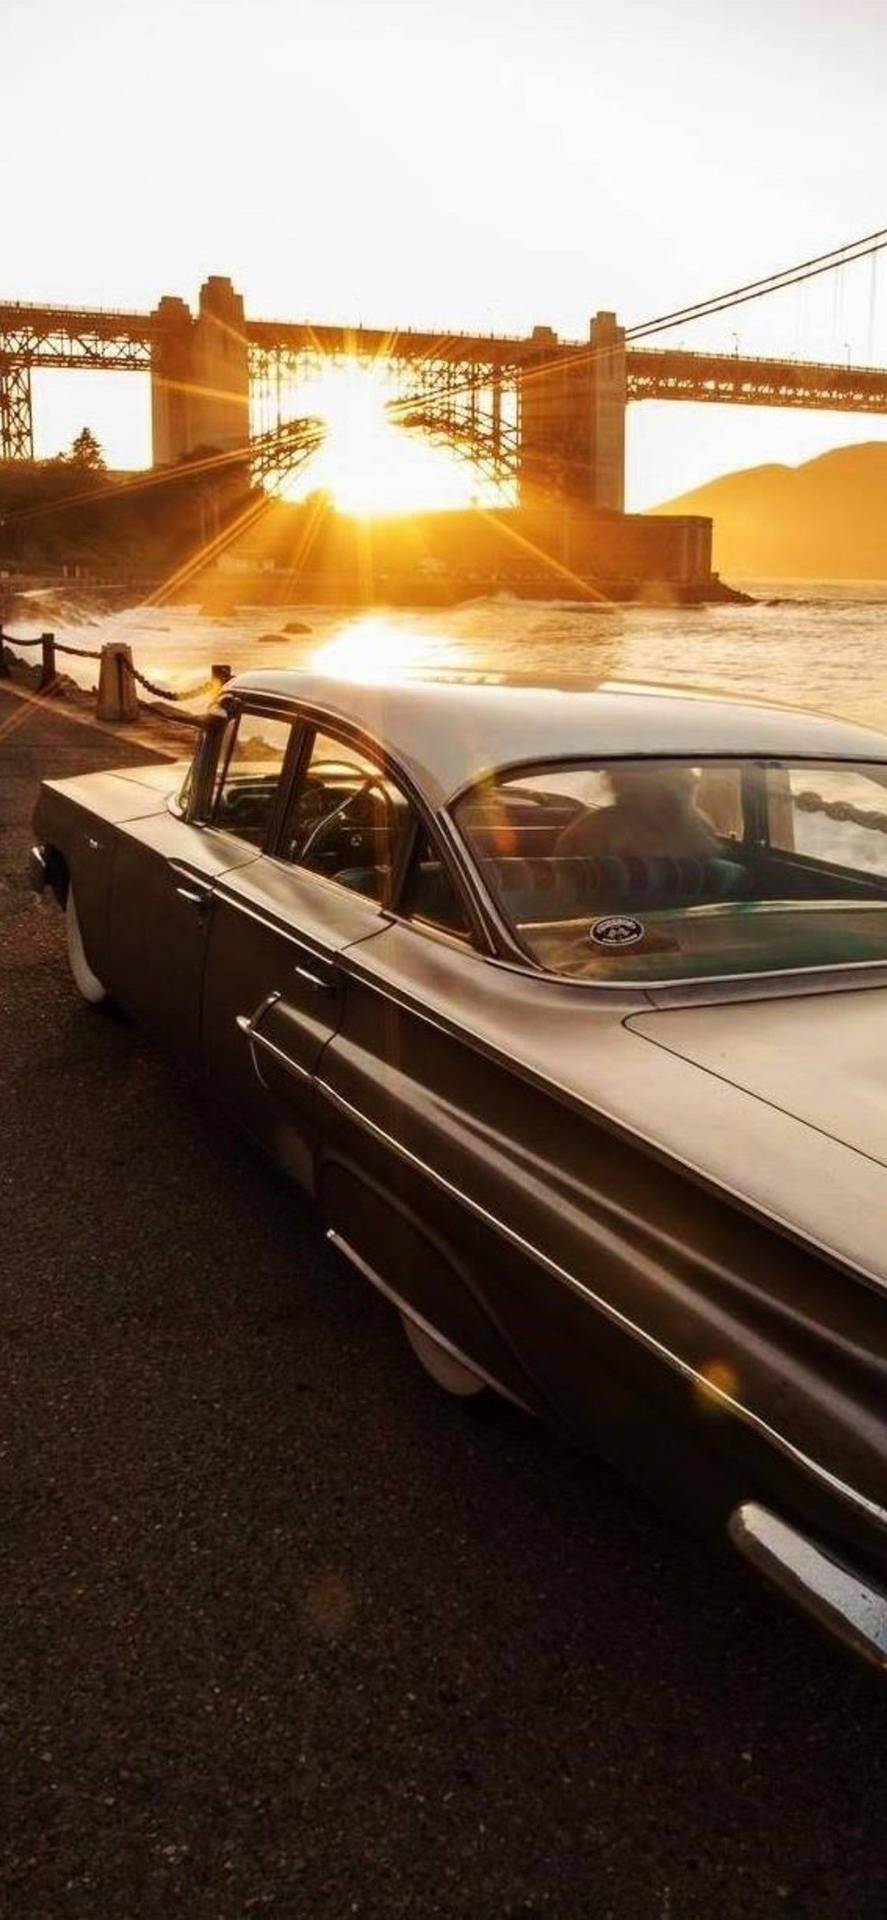 Vertical Vintage Cadillac Sunset Wallpaper